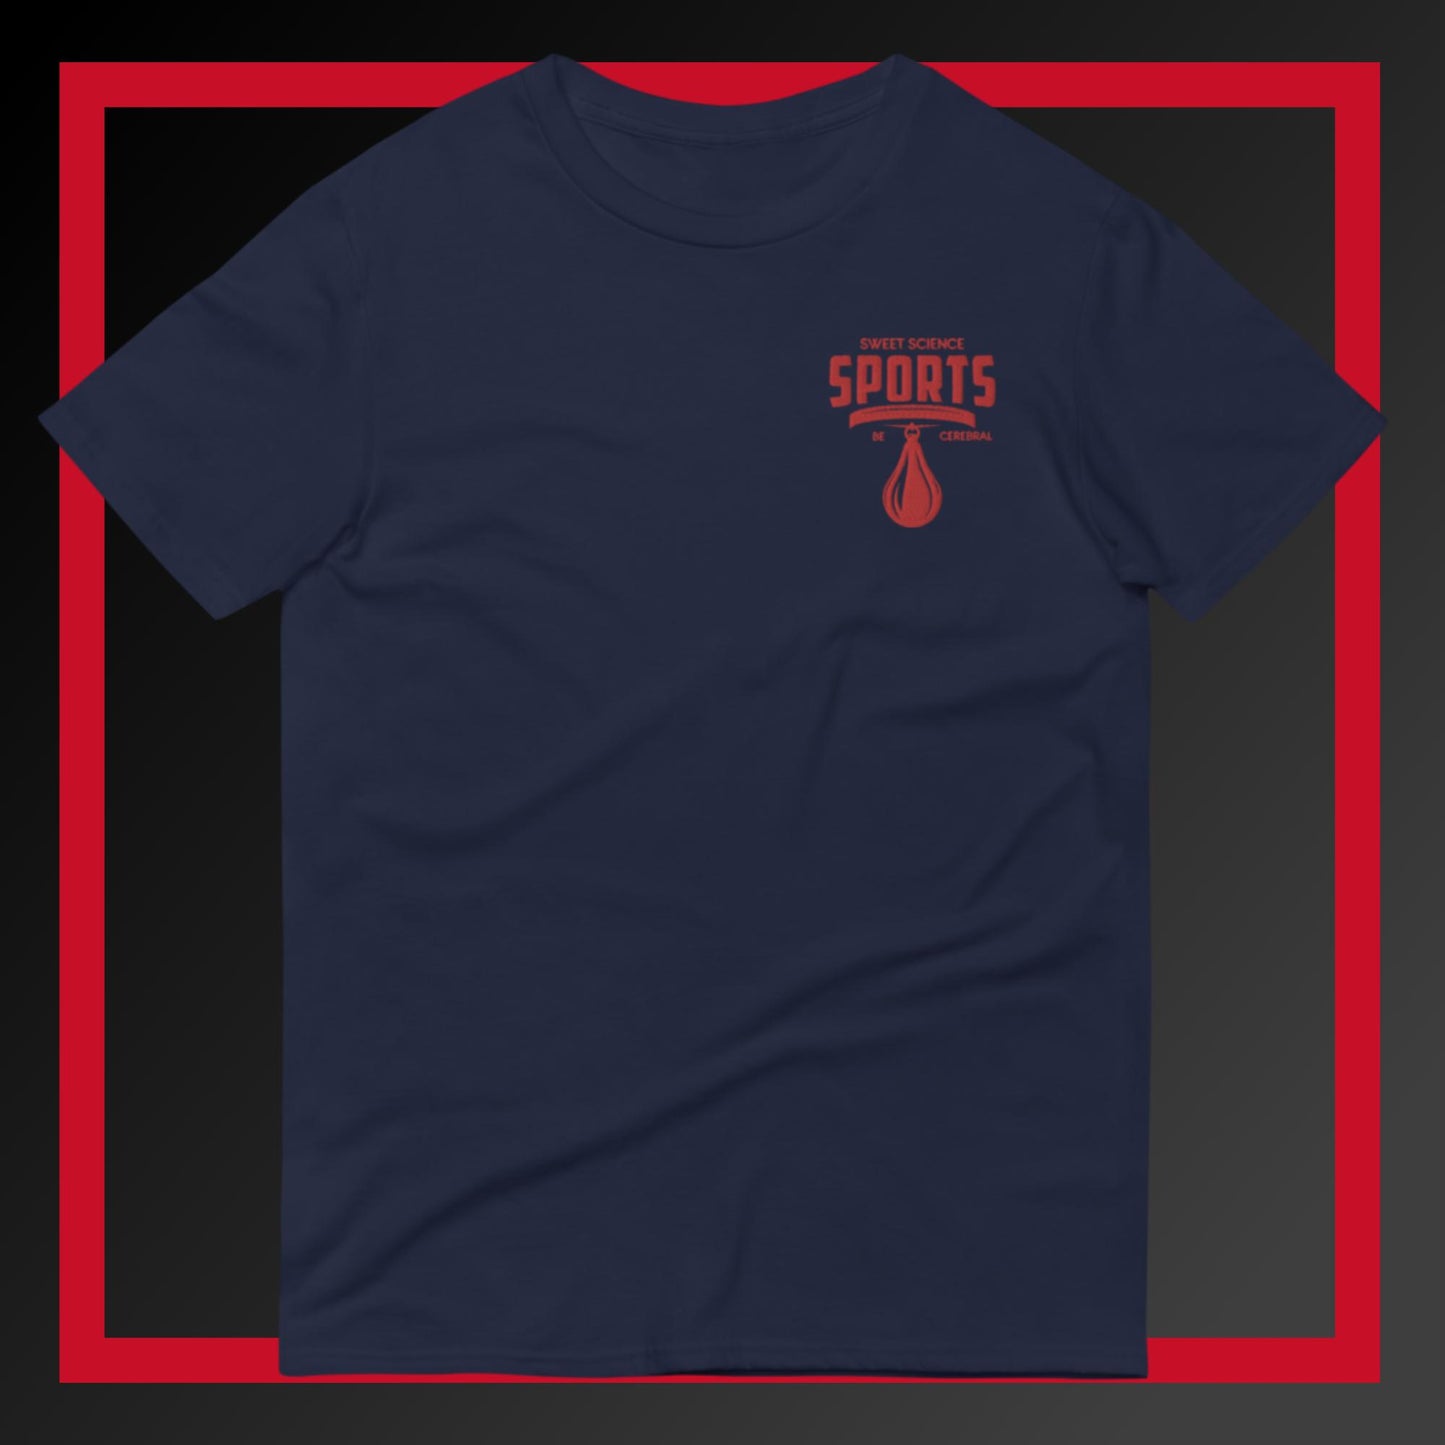 Sweet Science Sports Short-Sleeve T-Shirt